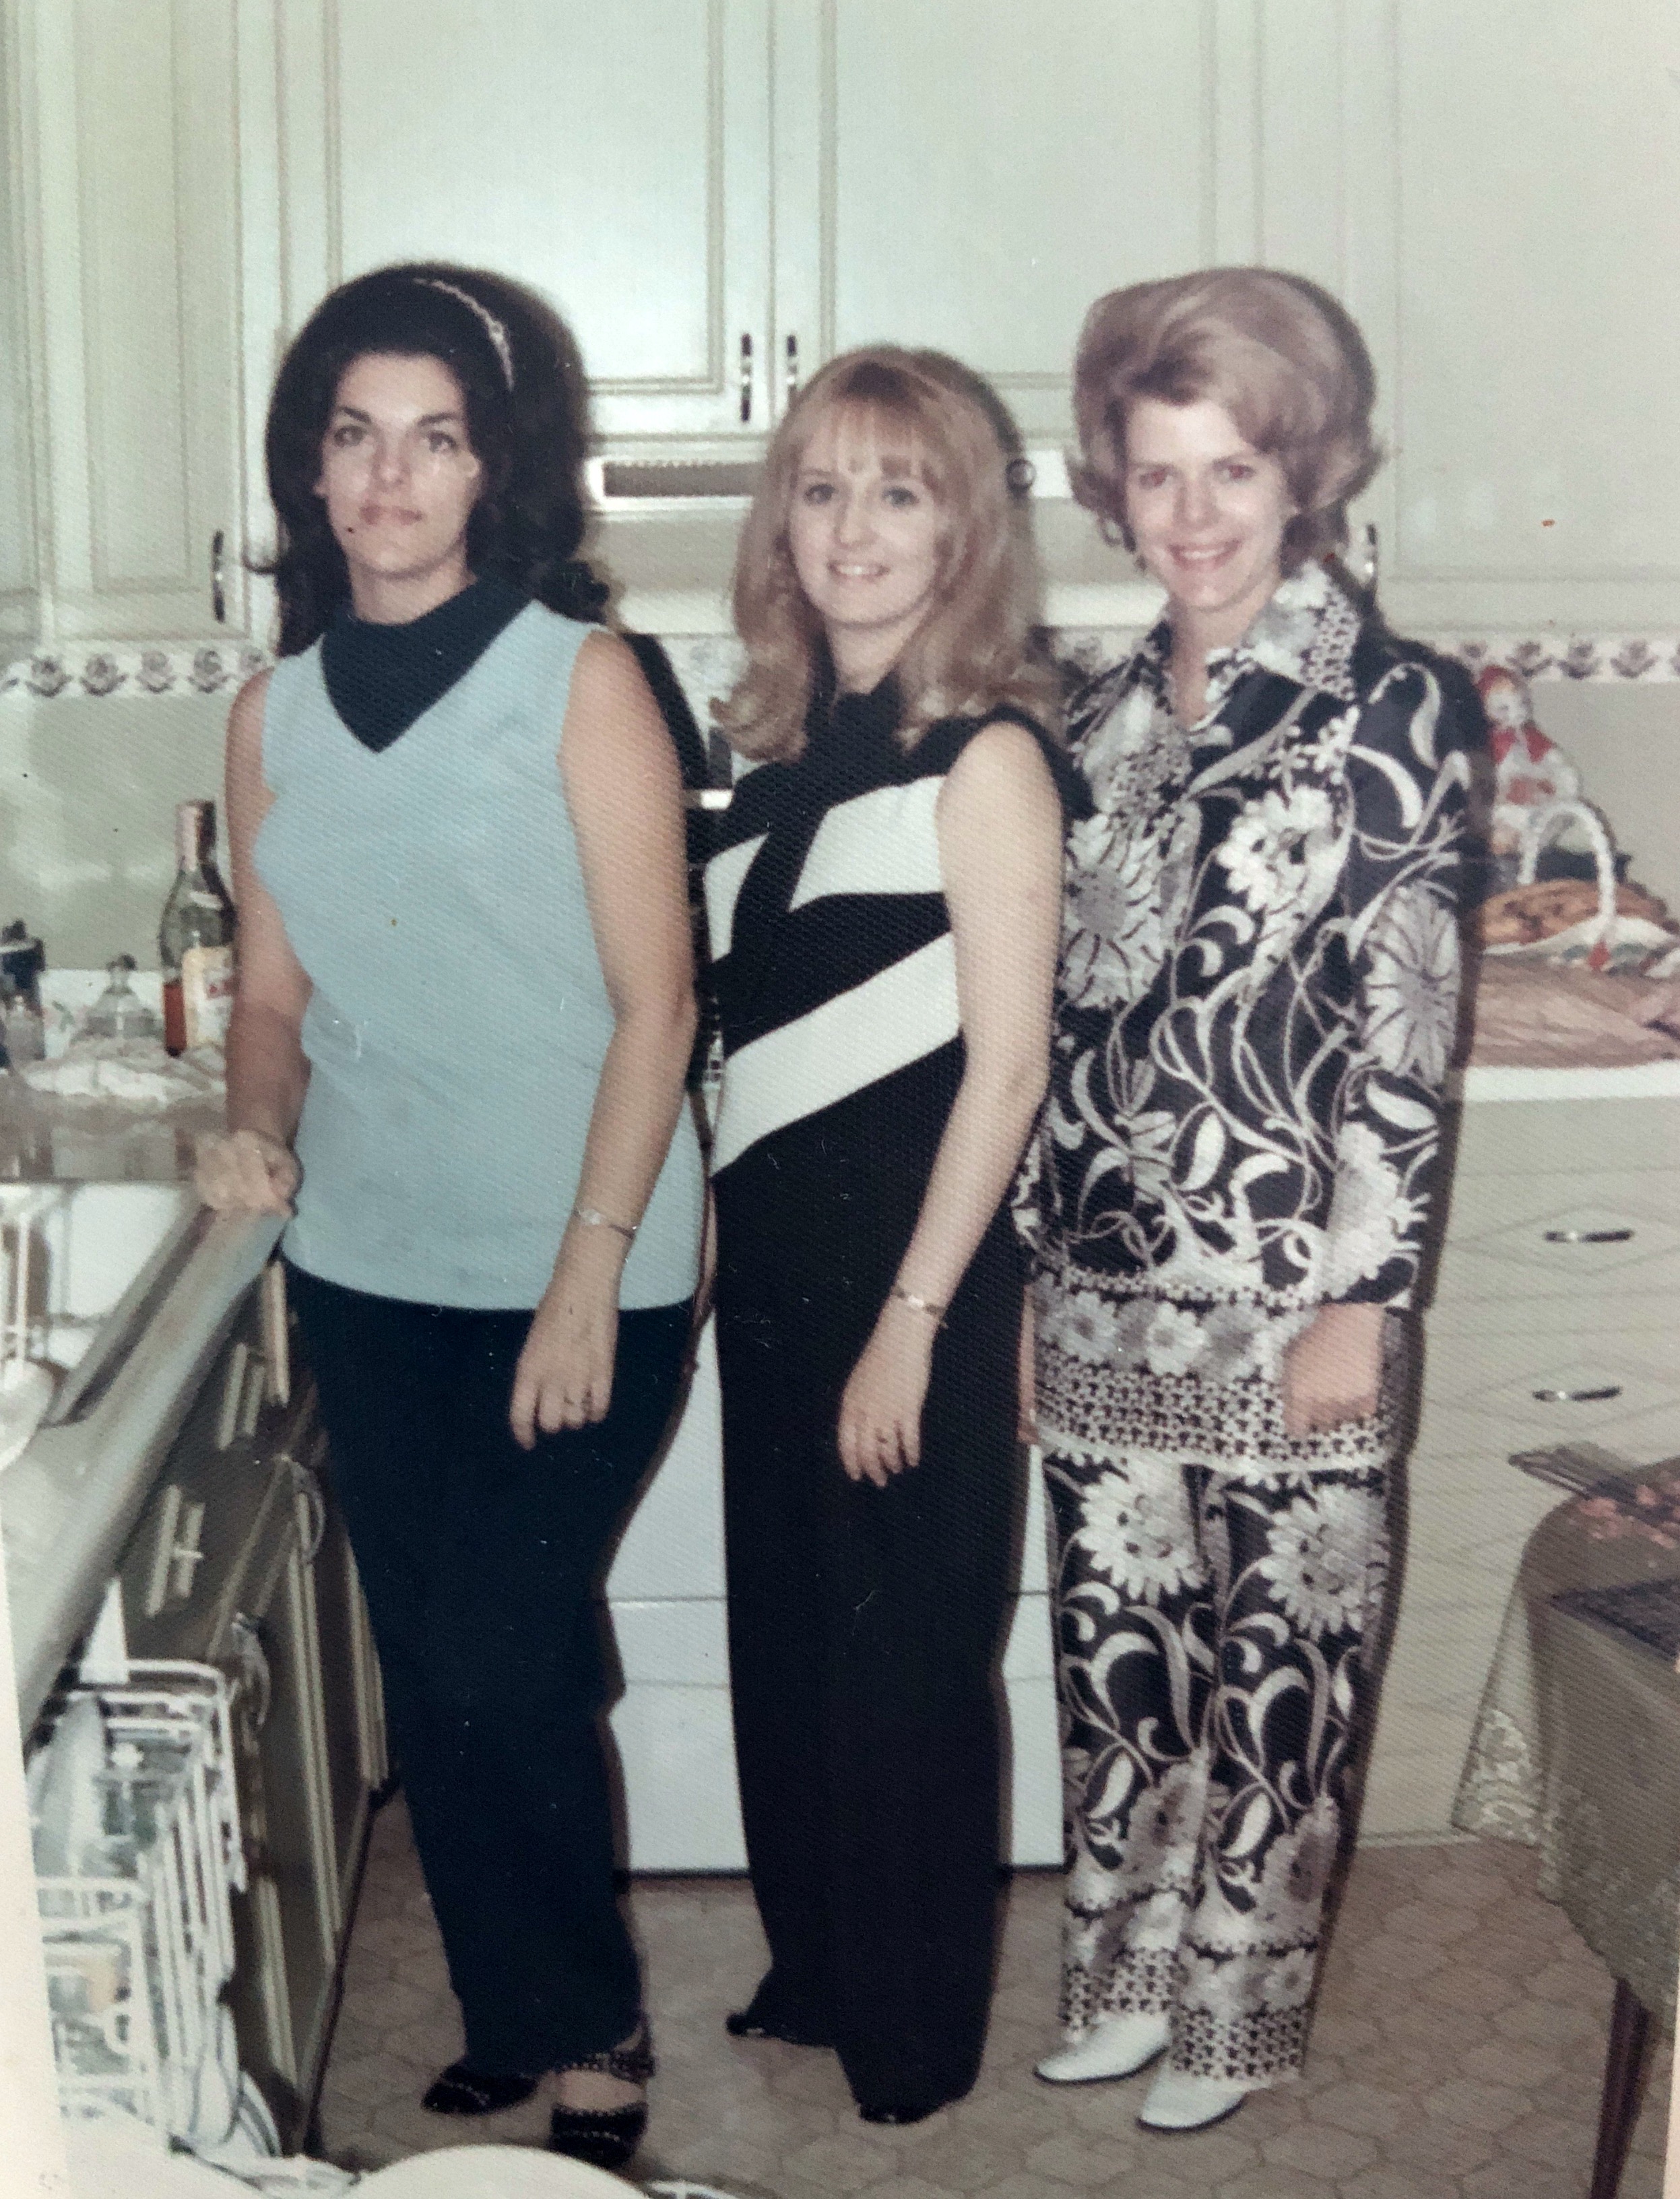 Aunt Yvonne, Aunt Linda, and Mom (Carol) in Grammy’s kitchen ca. 1970